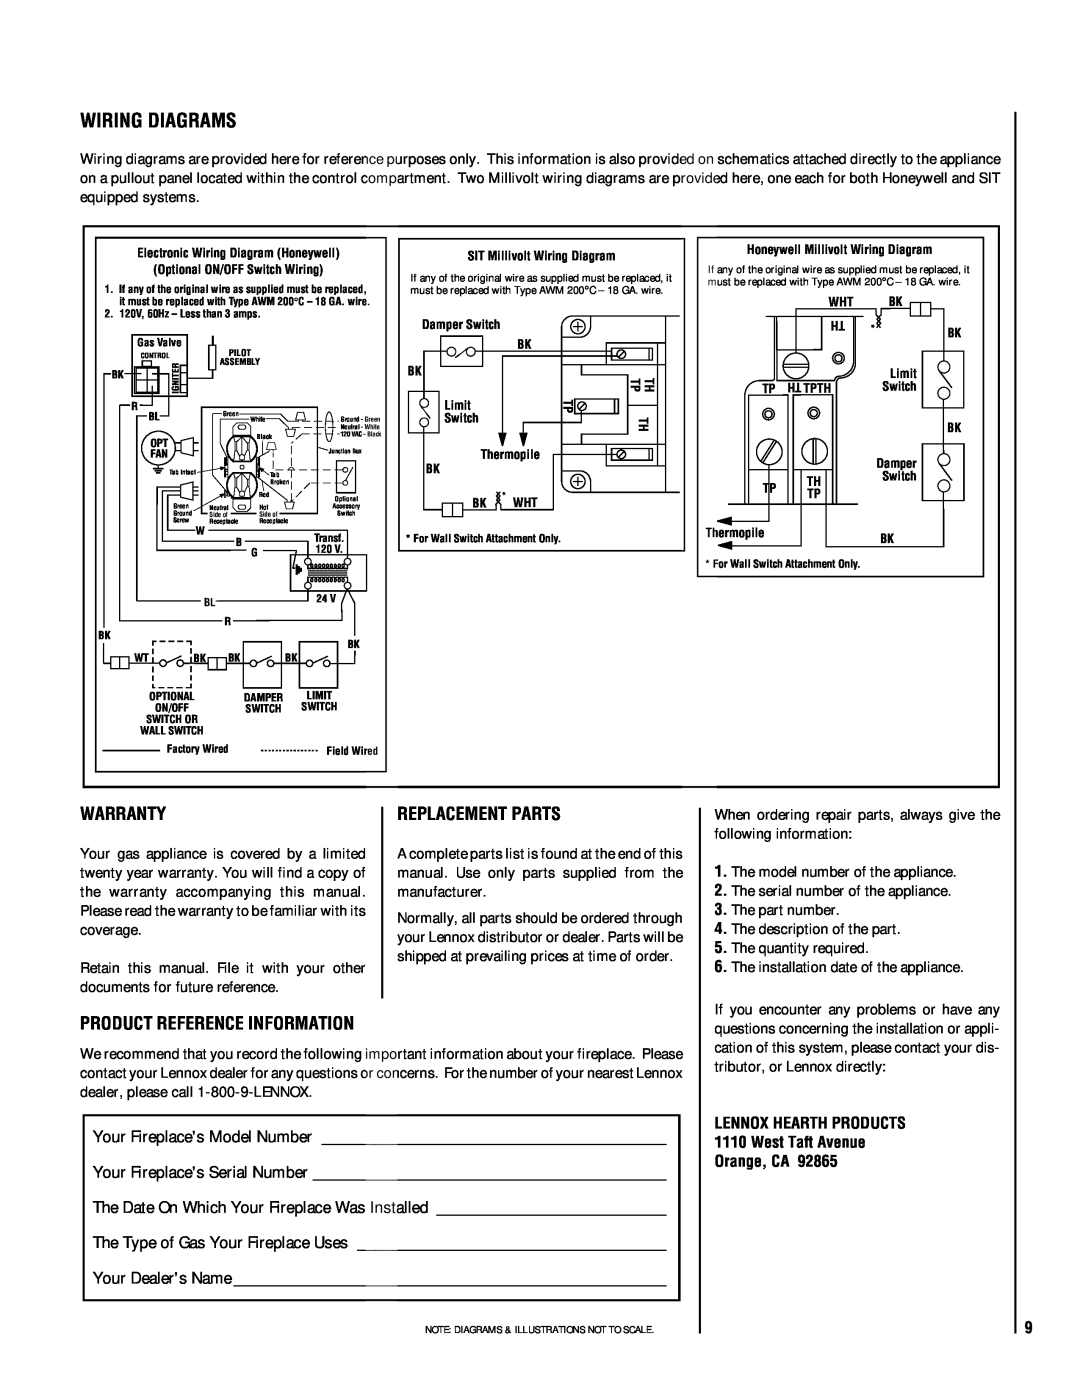 Lennox Hearth LBV-4324EN, LBV-3824EN, LBV-4324MP-H Warranty, Replacement Parts, Product Reference Information, Orange, CA 